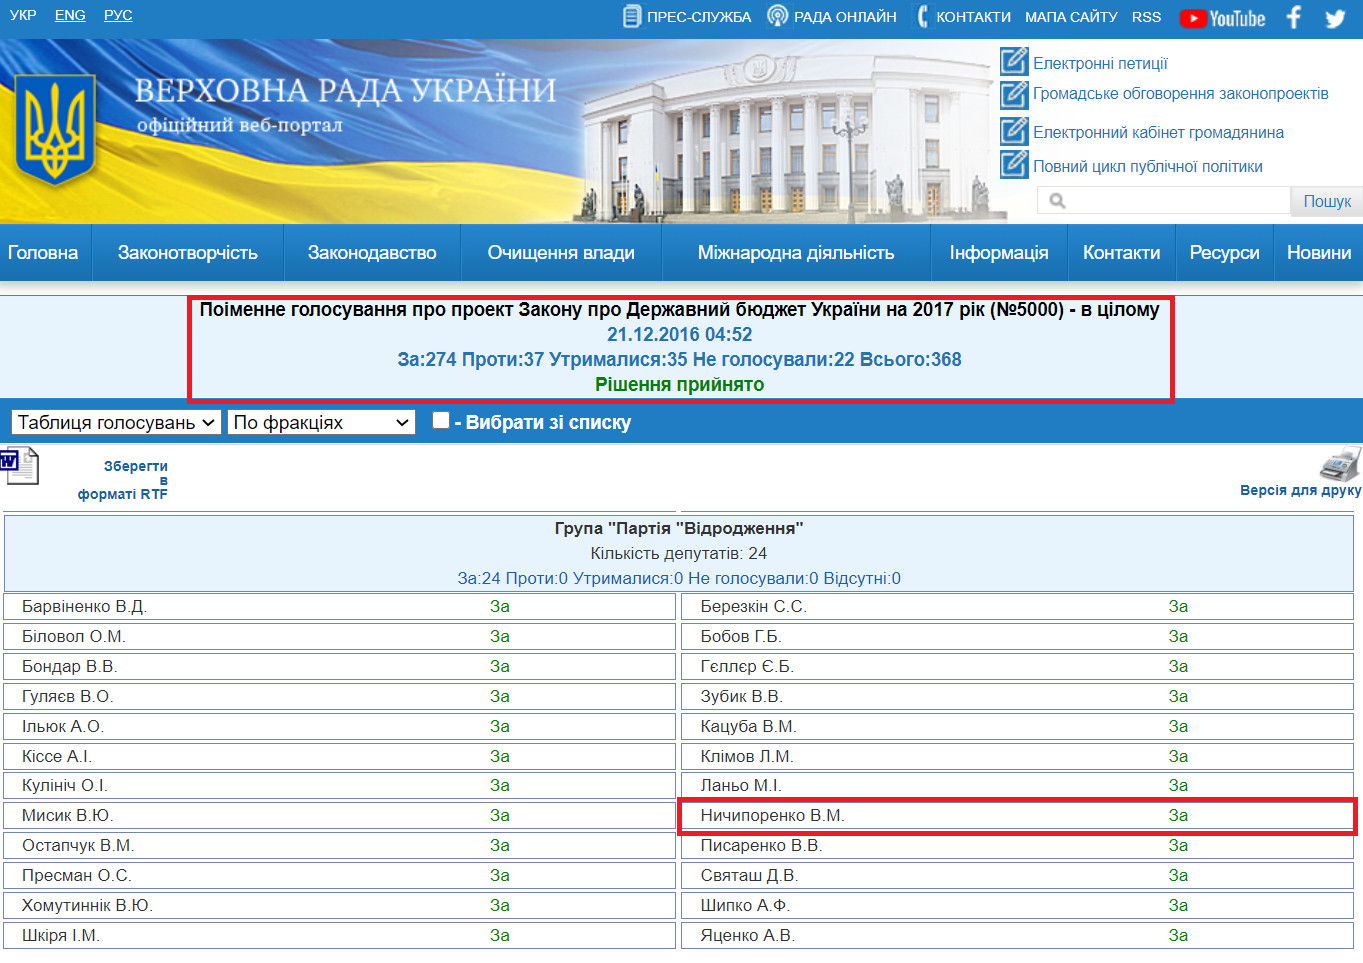 http://w1.c1.rada.gov.ua/pls/radan_gs09/ns_arh_golos?g_id=1022608&n_skl=8